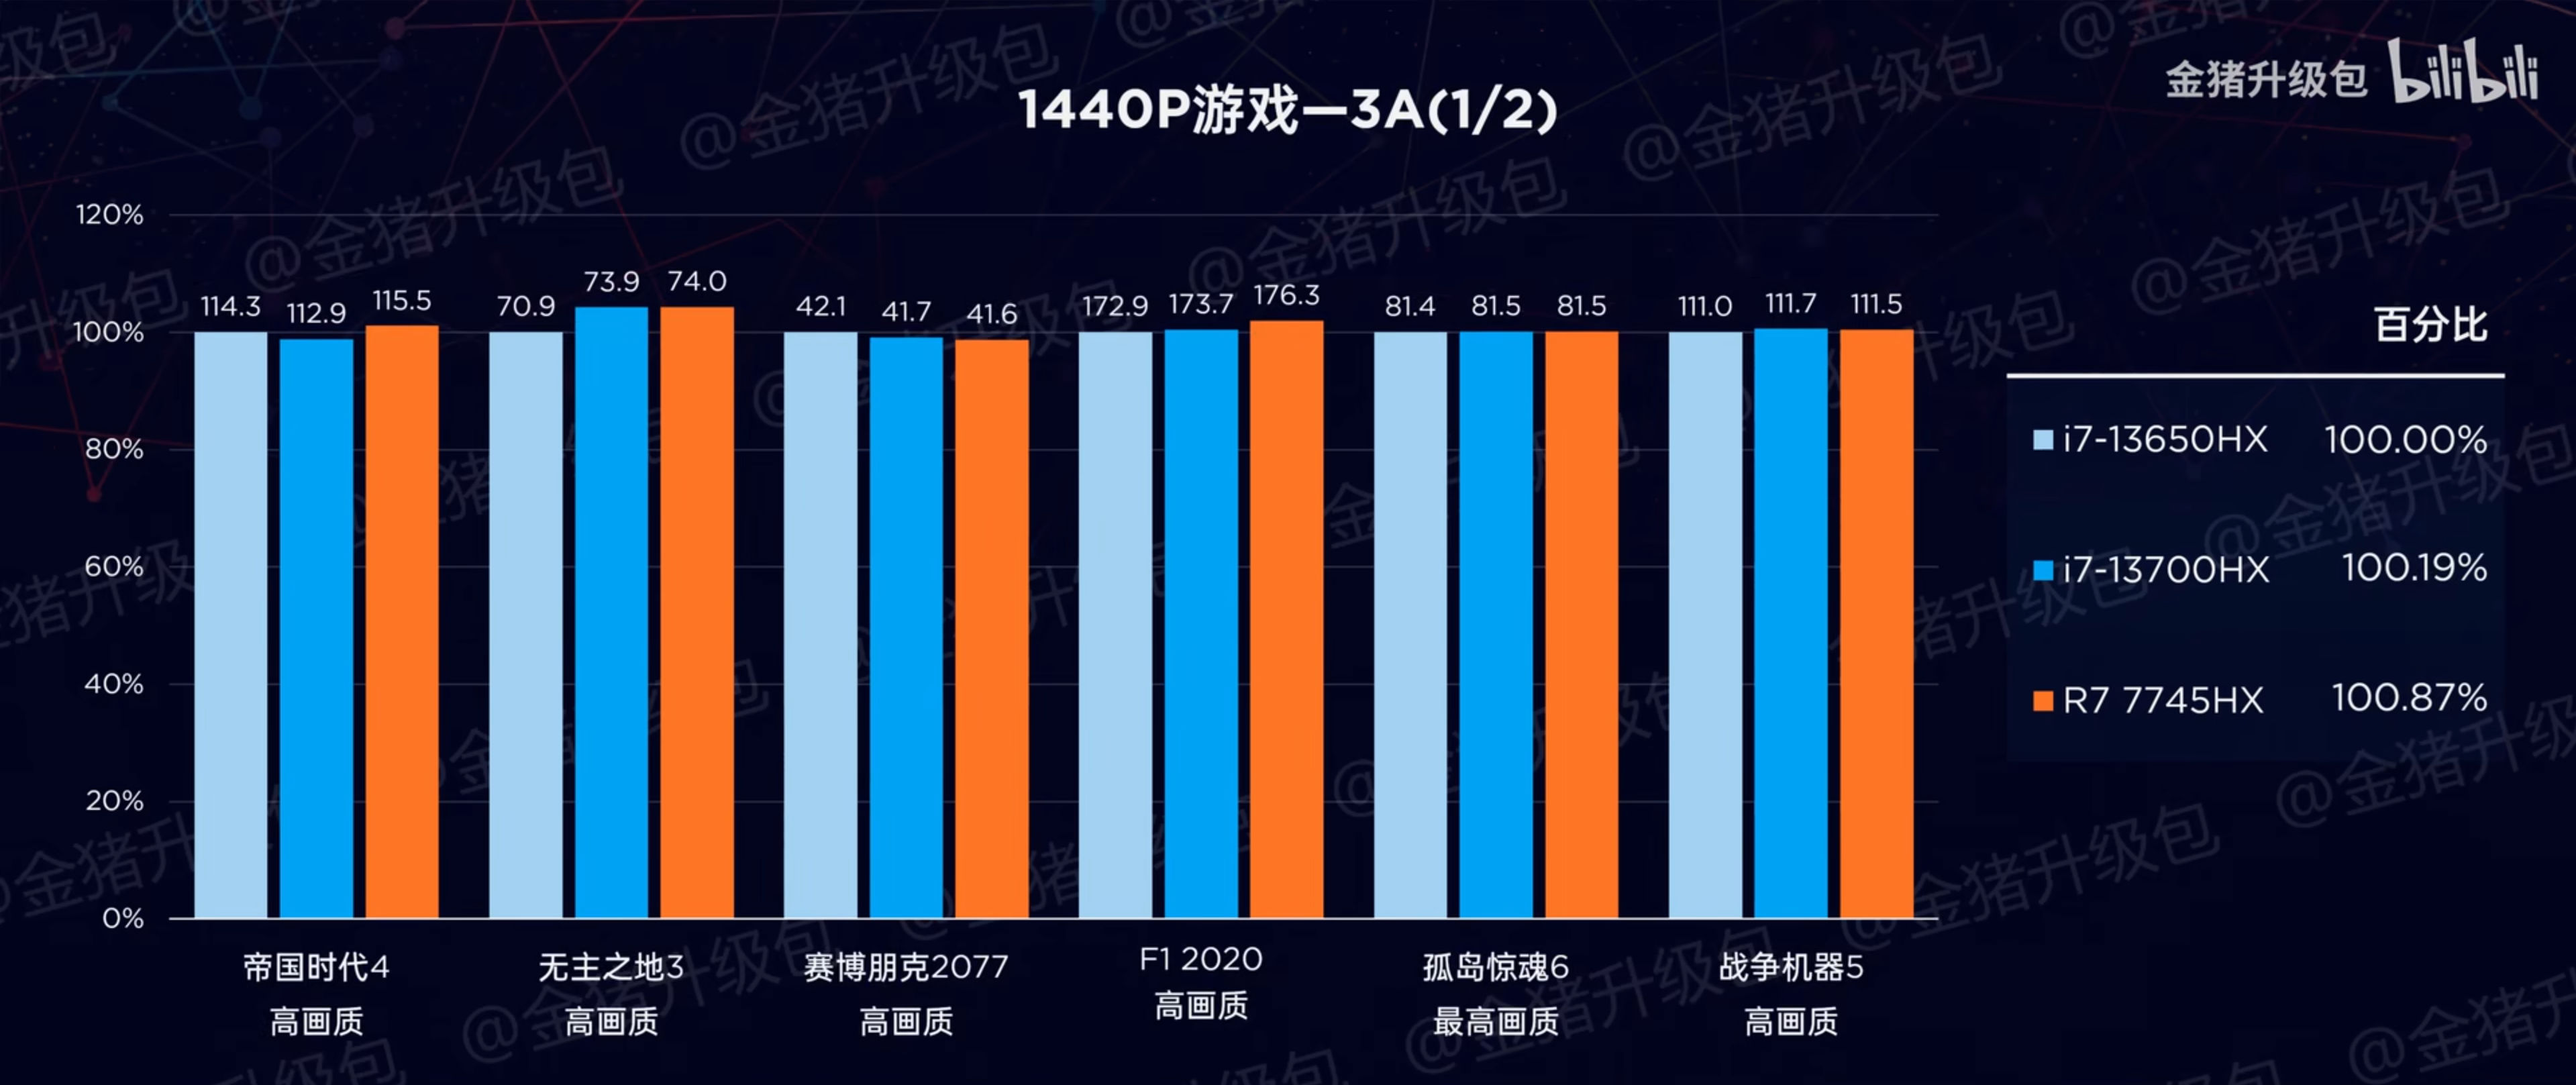 AMD-Ryzen-7-7745HX-Dragon-Range-8-Core-Laptop-CPU-Review-_-Gaming-Benchmarks-_3.jpg